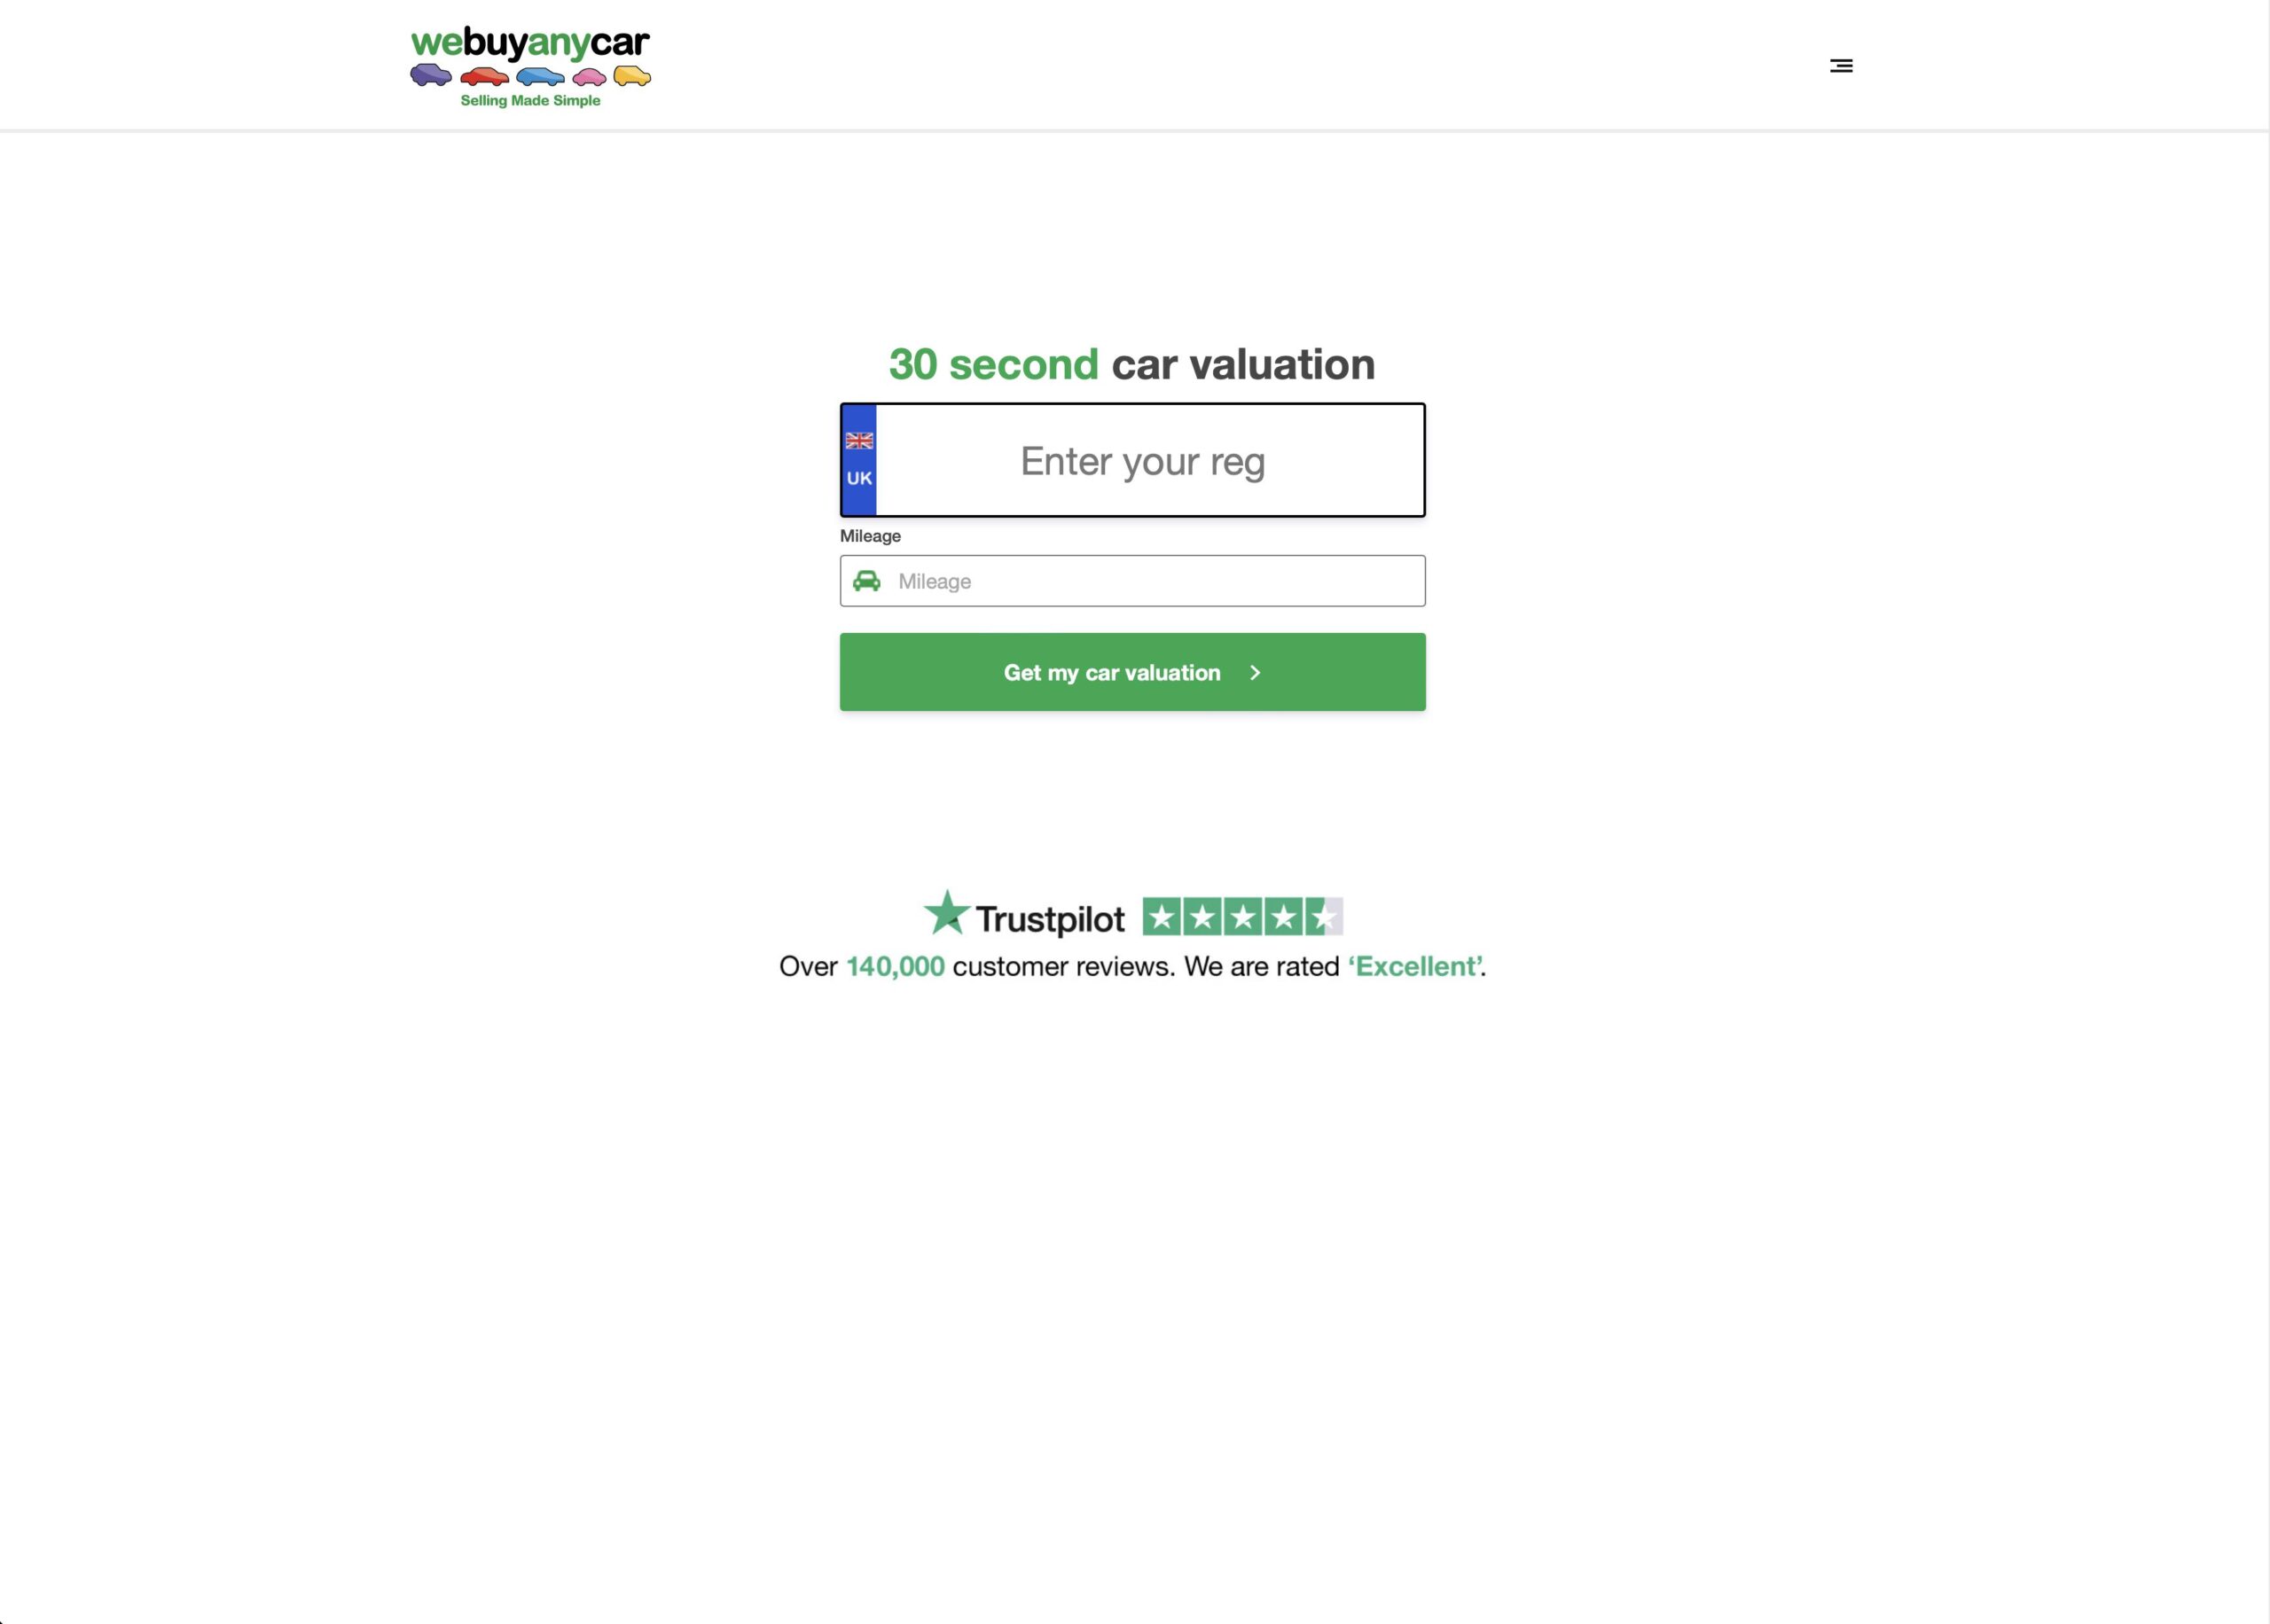 webuyanycar car selling page